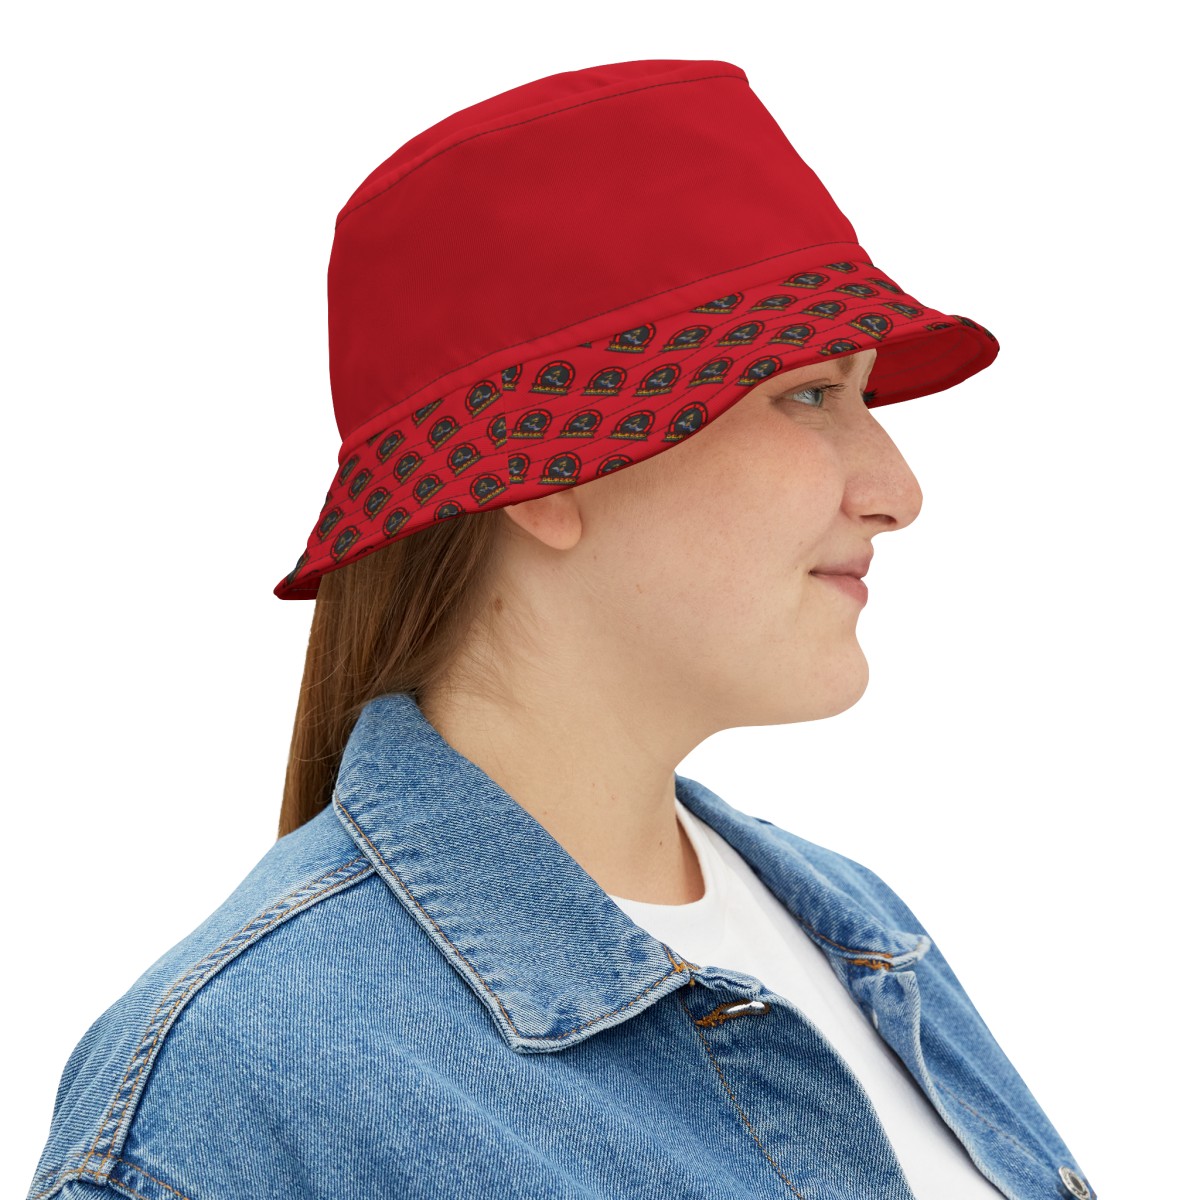 Dallah Radio Red Bucket Hat product thumbnail image